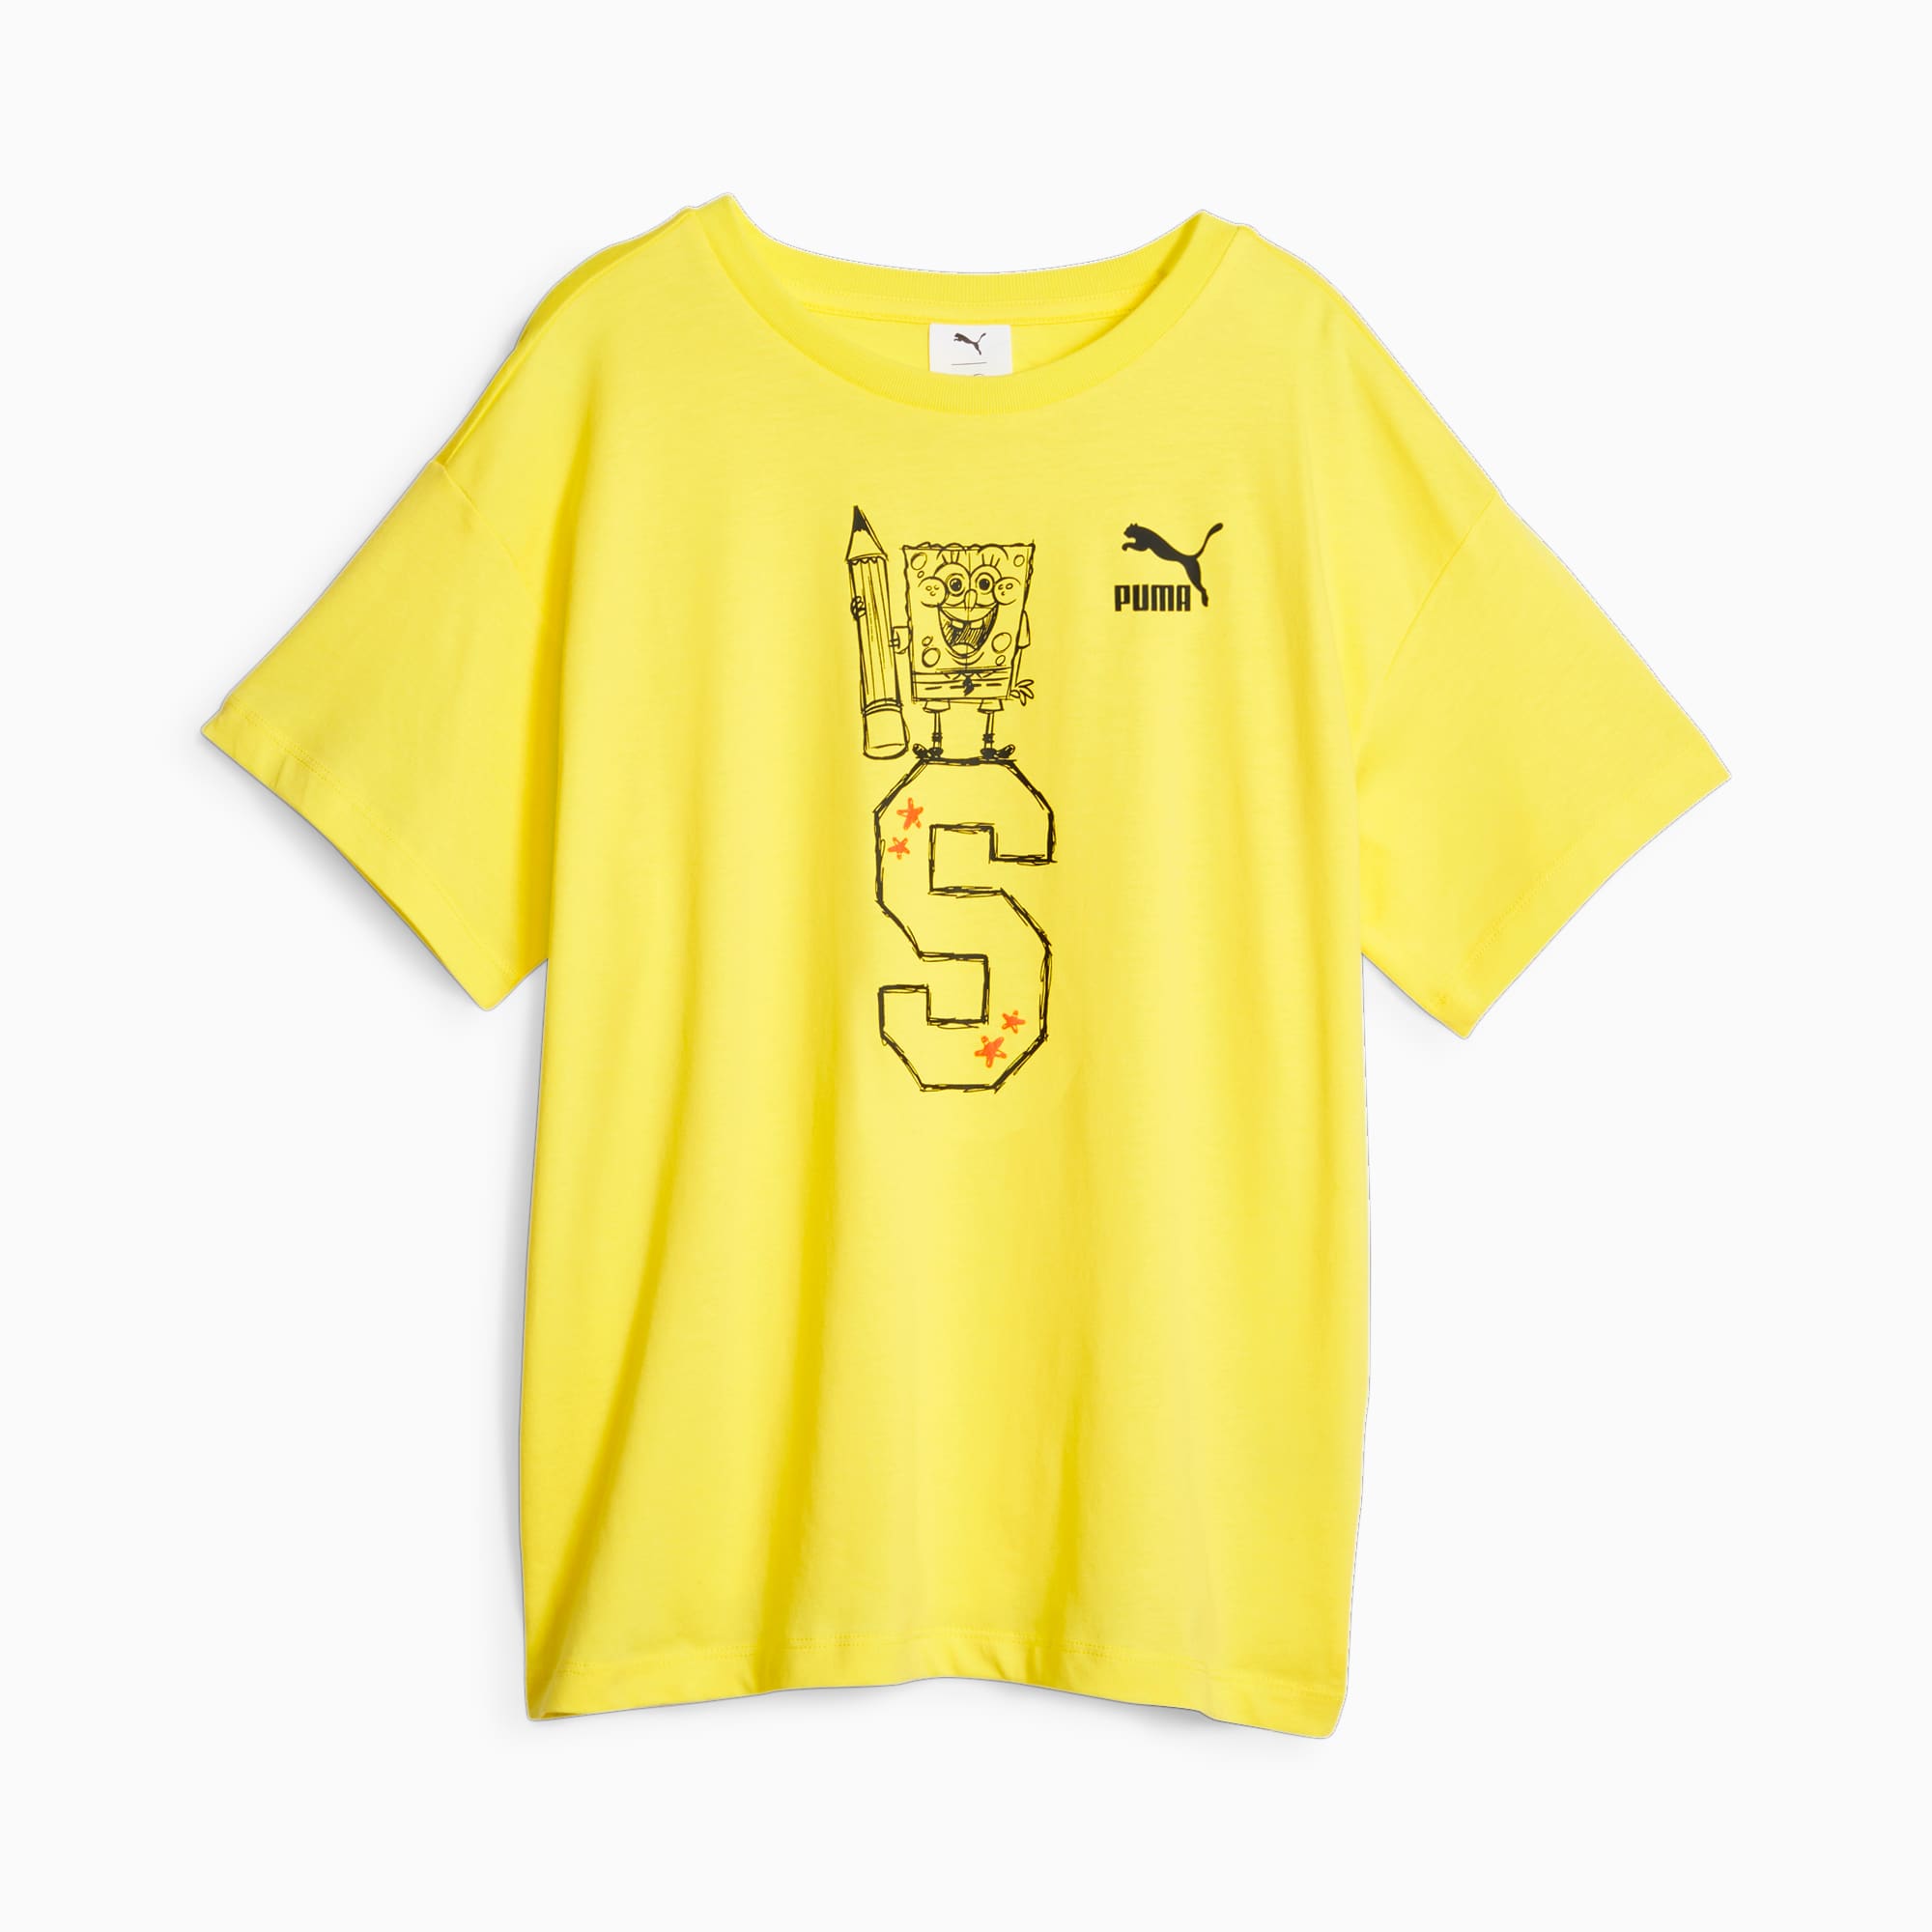 PUMA X Spongebob Squarepants Youth Graphic Tee, Lemon Meringue, Size 128, Clothing